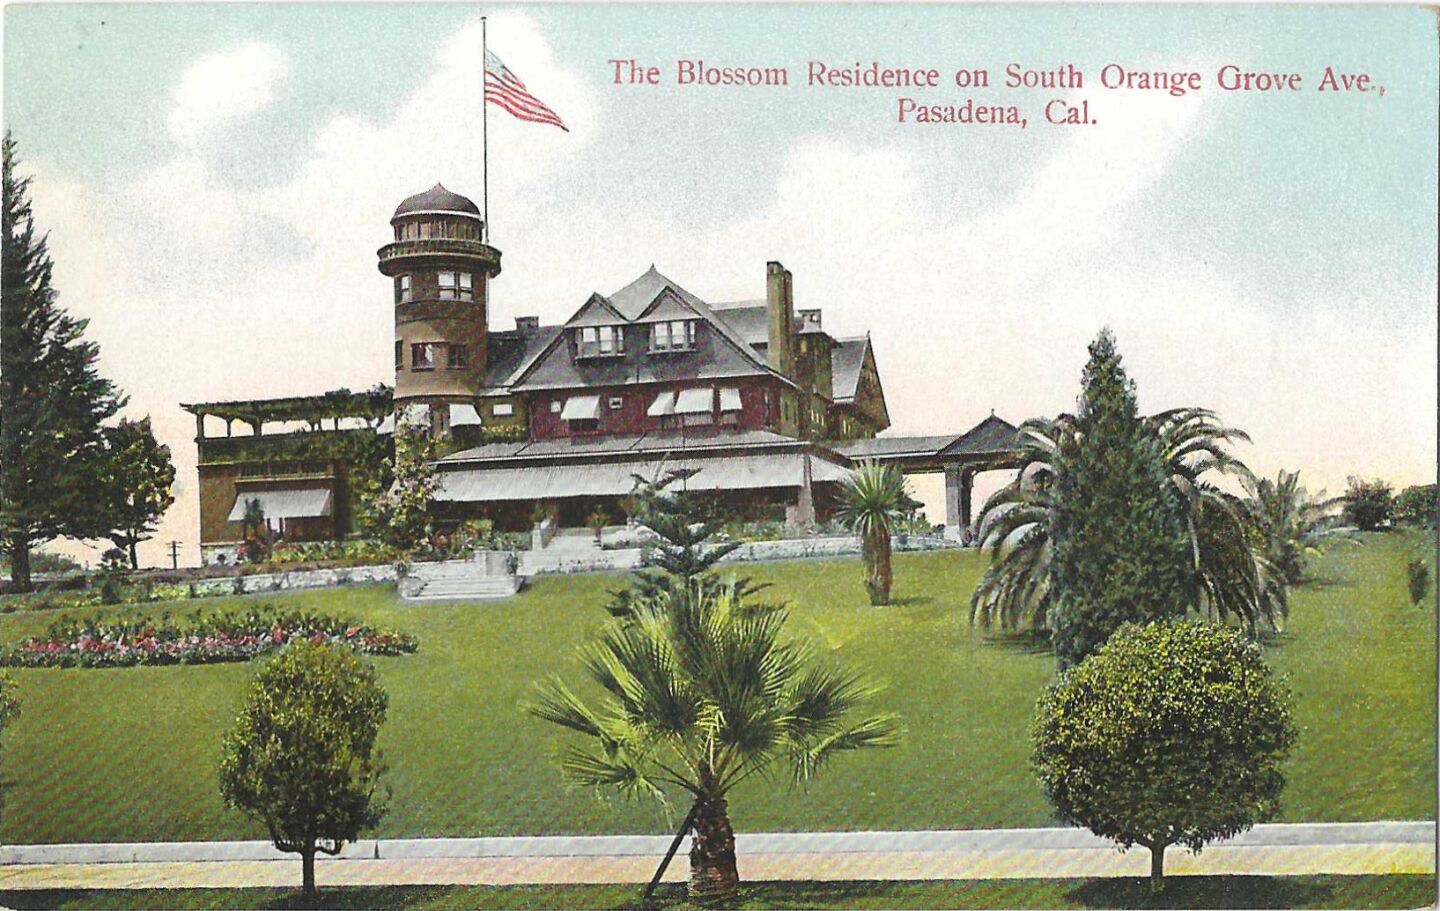 The Blossom Residence on South Orange Grove Ave., Pasadena, Cal.